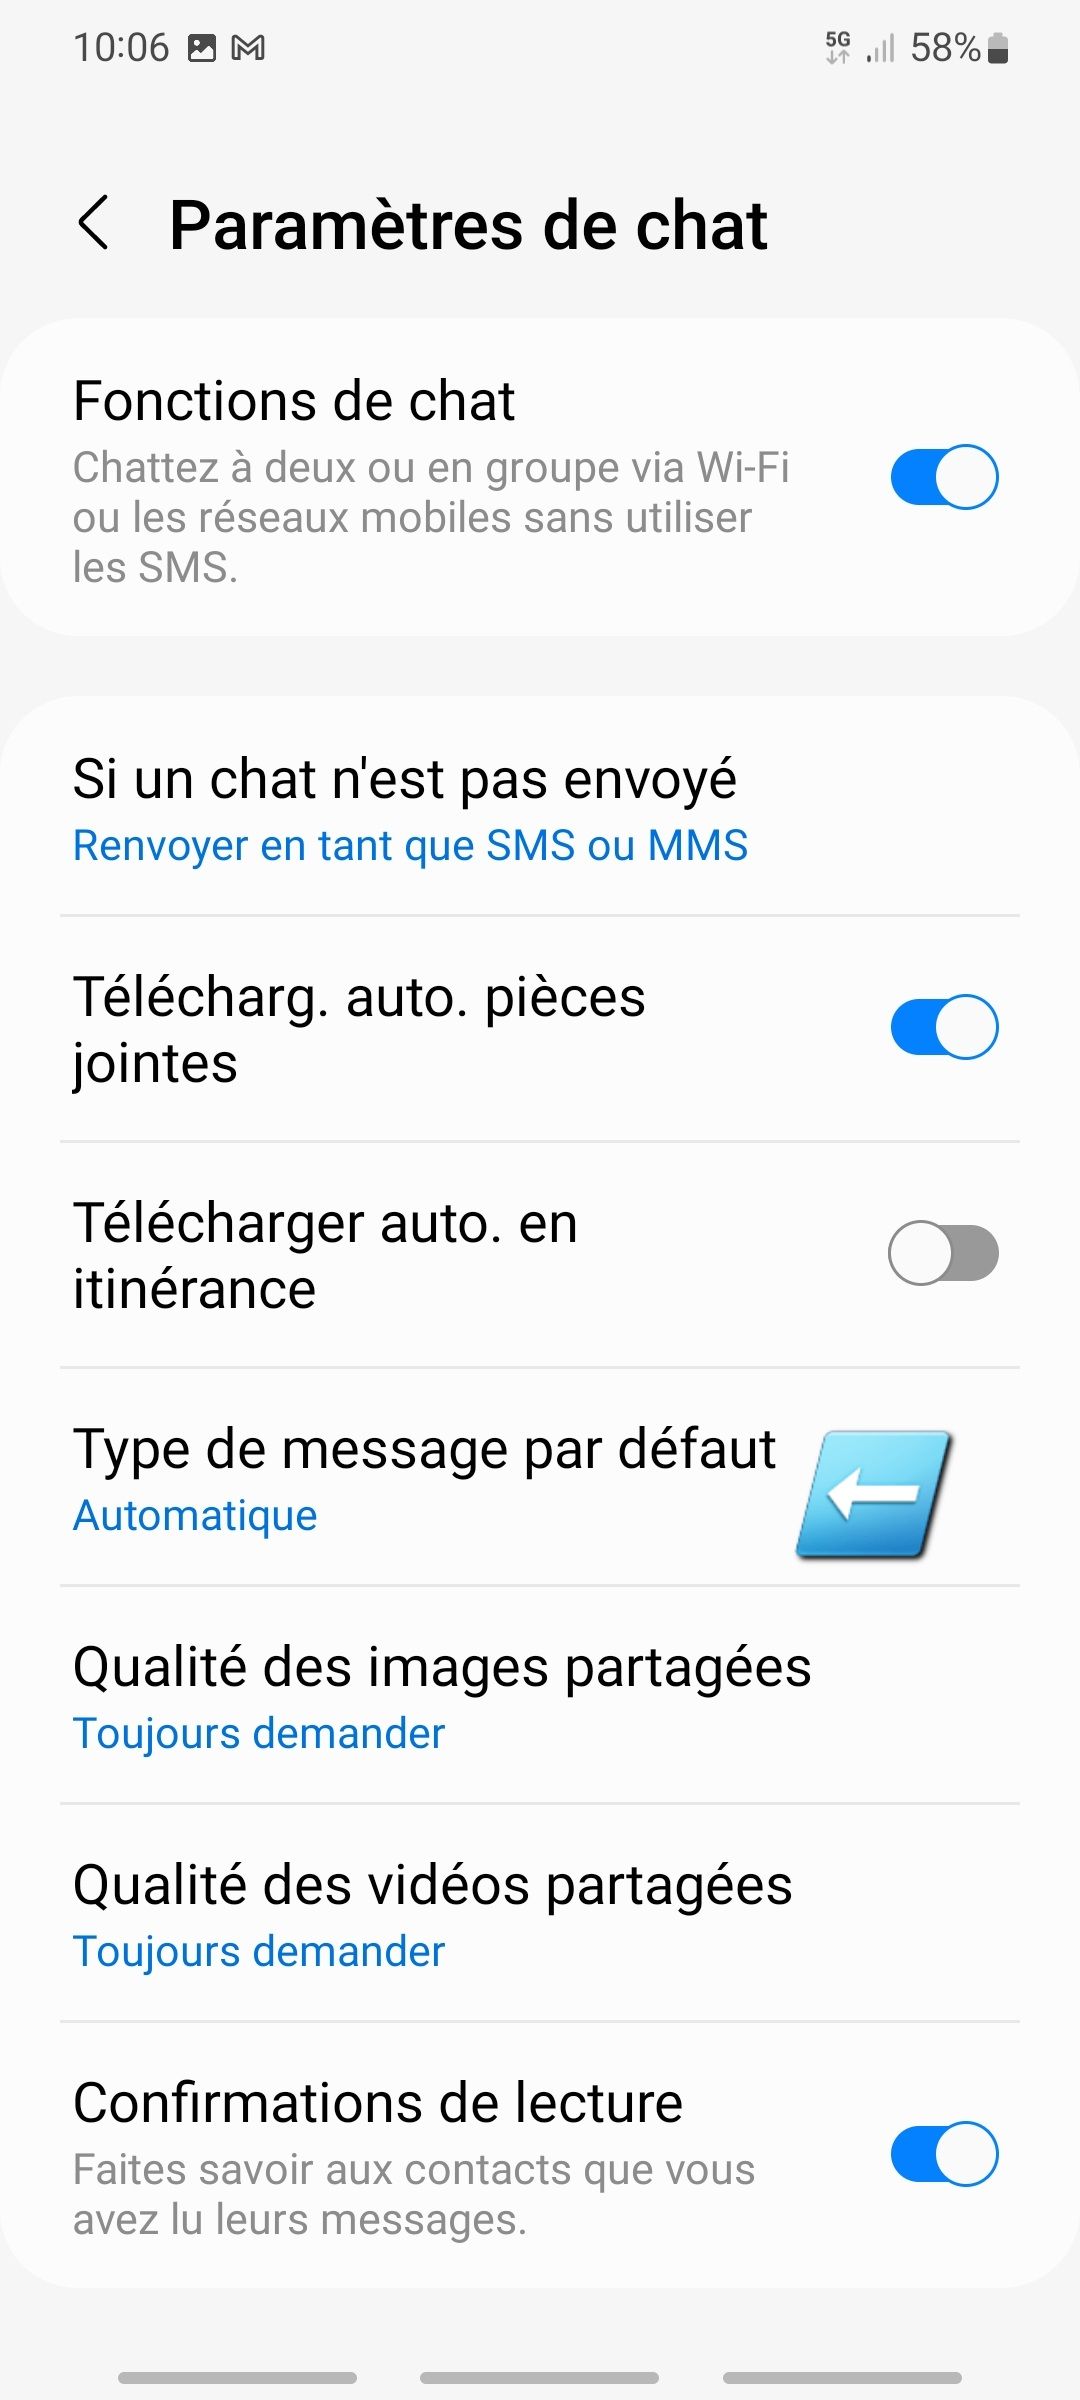 Tchat et où sms - Samsung Community